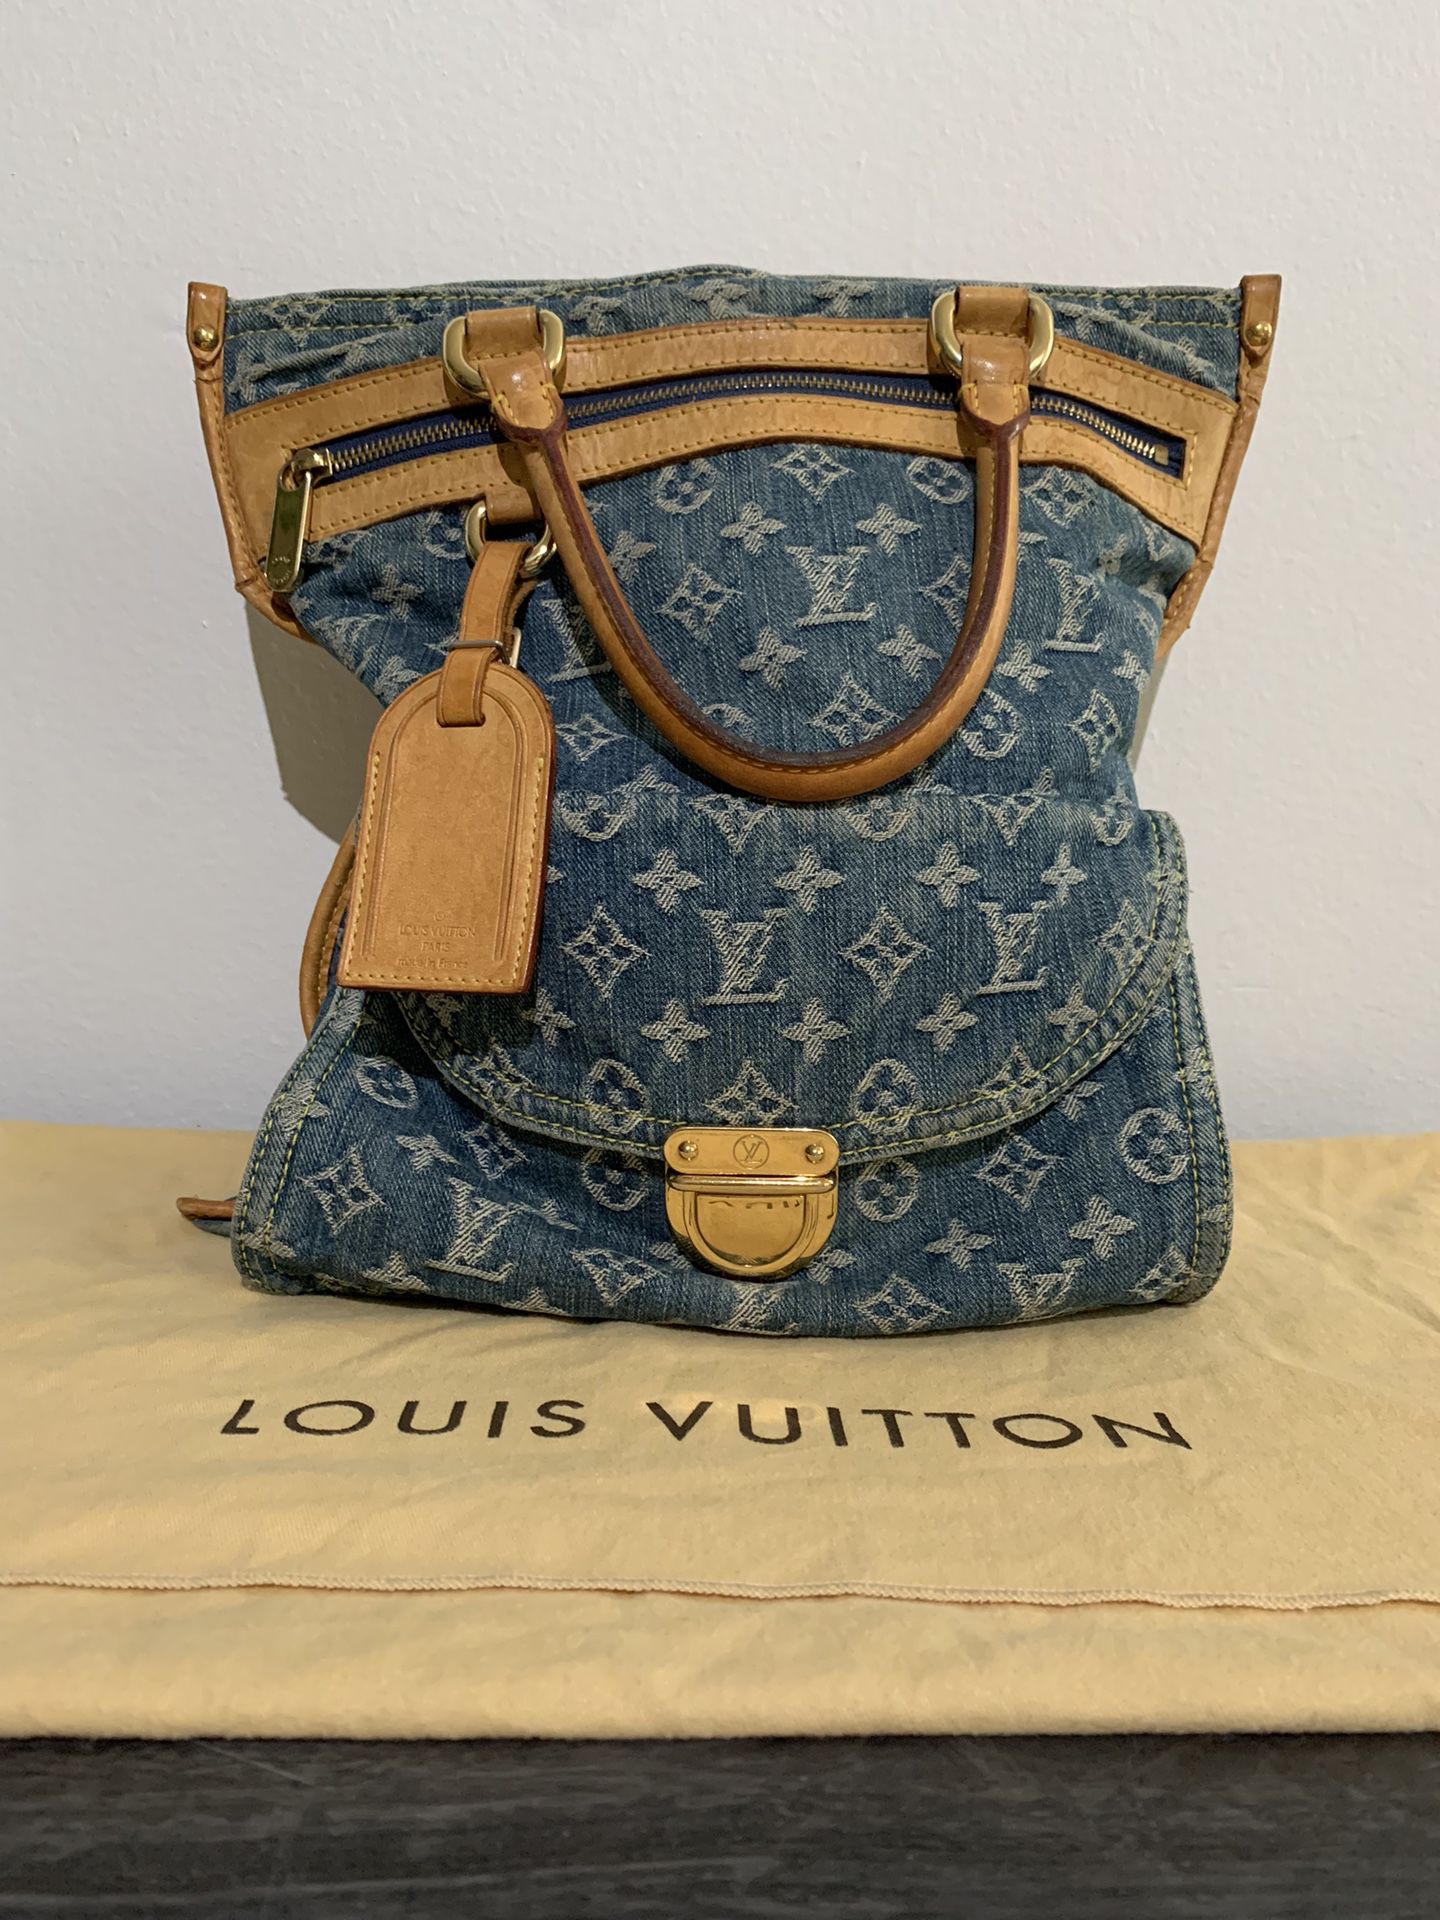 NIB Louis Vuitton sac plat XS for Sale in Irvine, CA - OfferUp